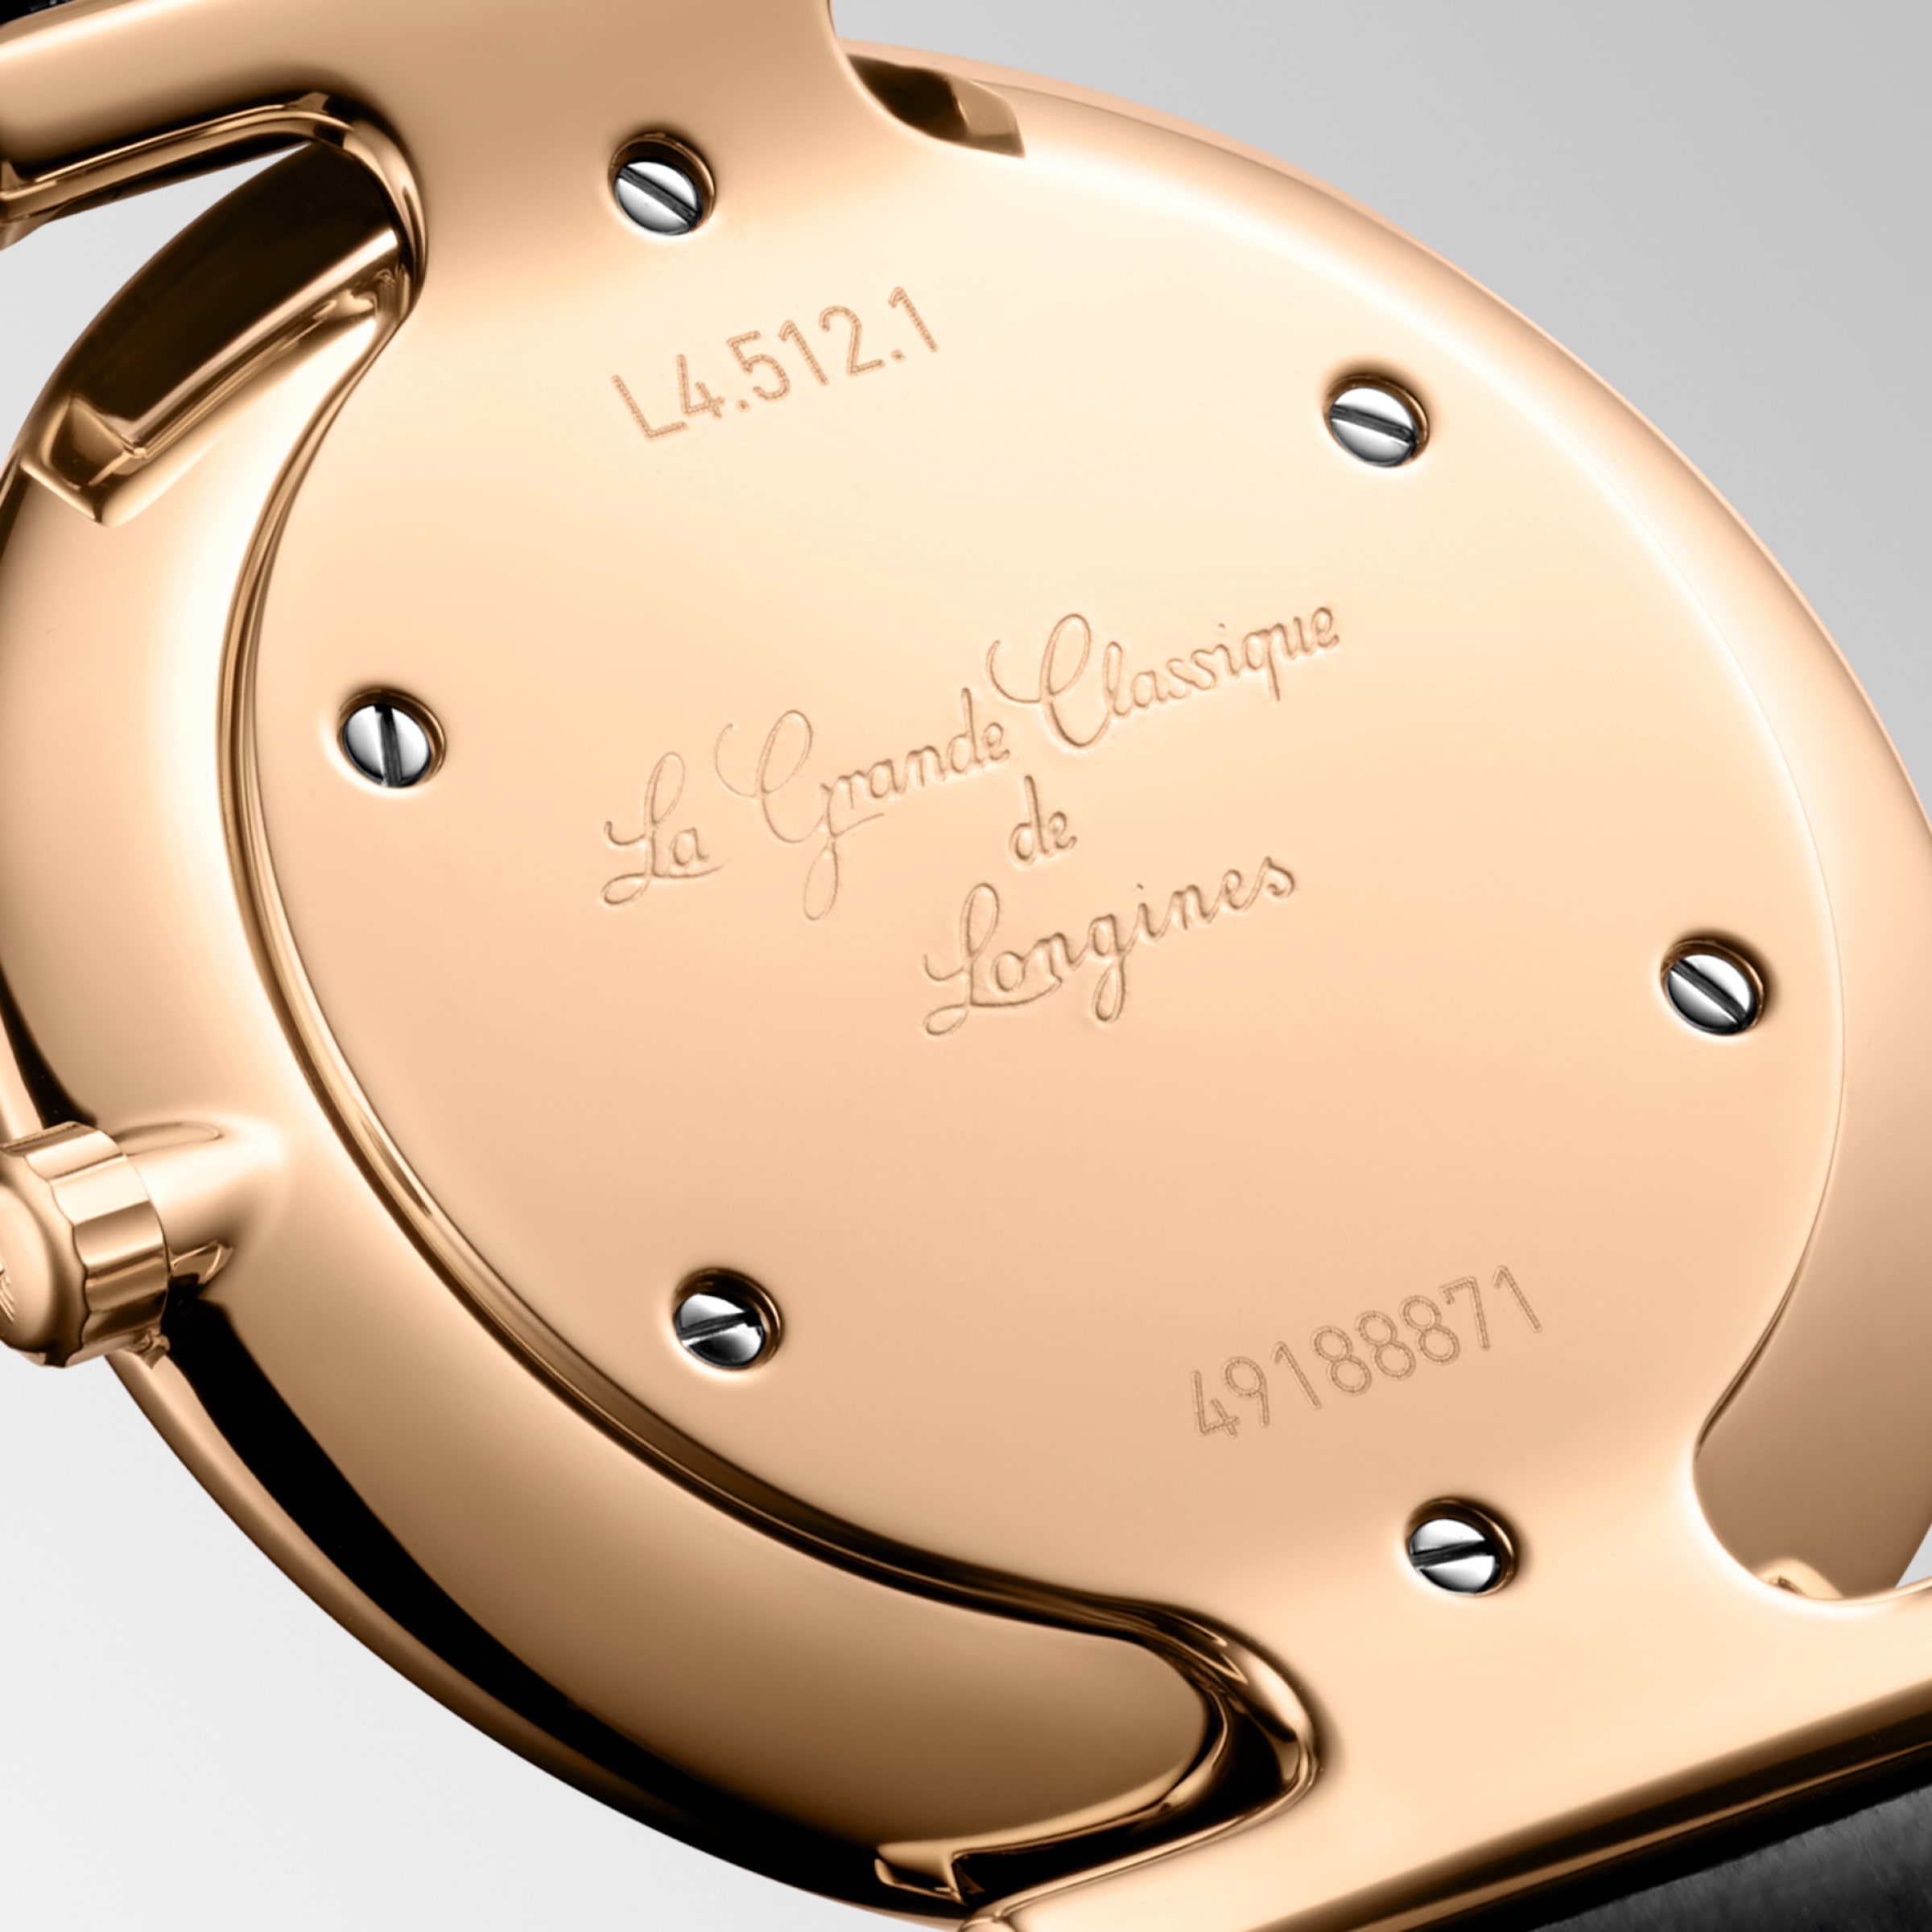 Longines LA GRANDE CLASSIQUE DE LONGINES Quartz Stainless steel and red PVD coating Watch - L4.512.1.67.7